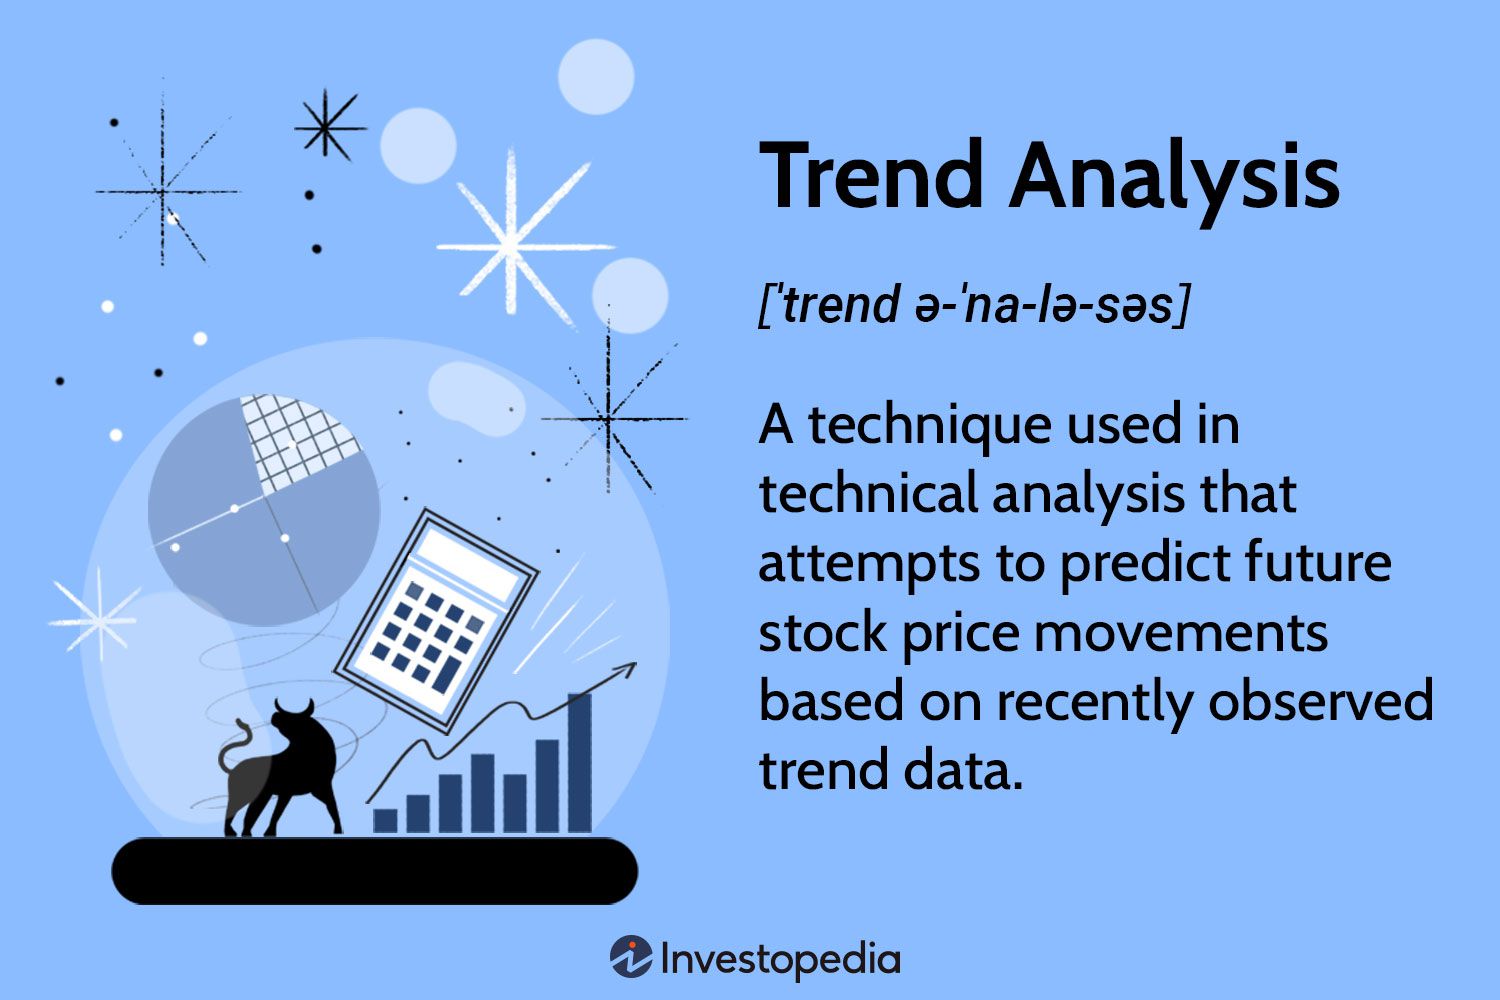 Trend Analysis